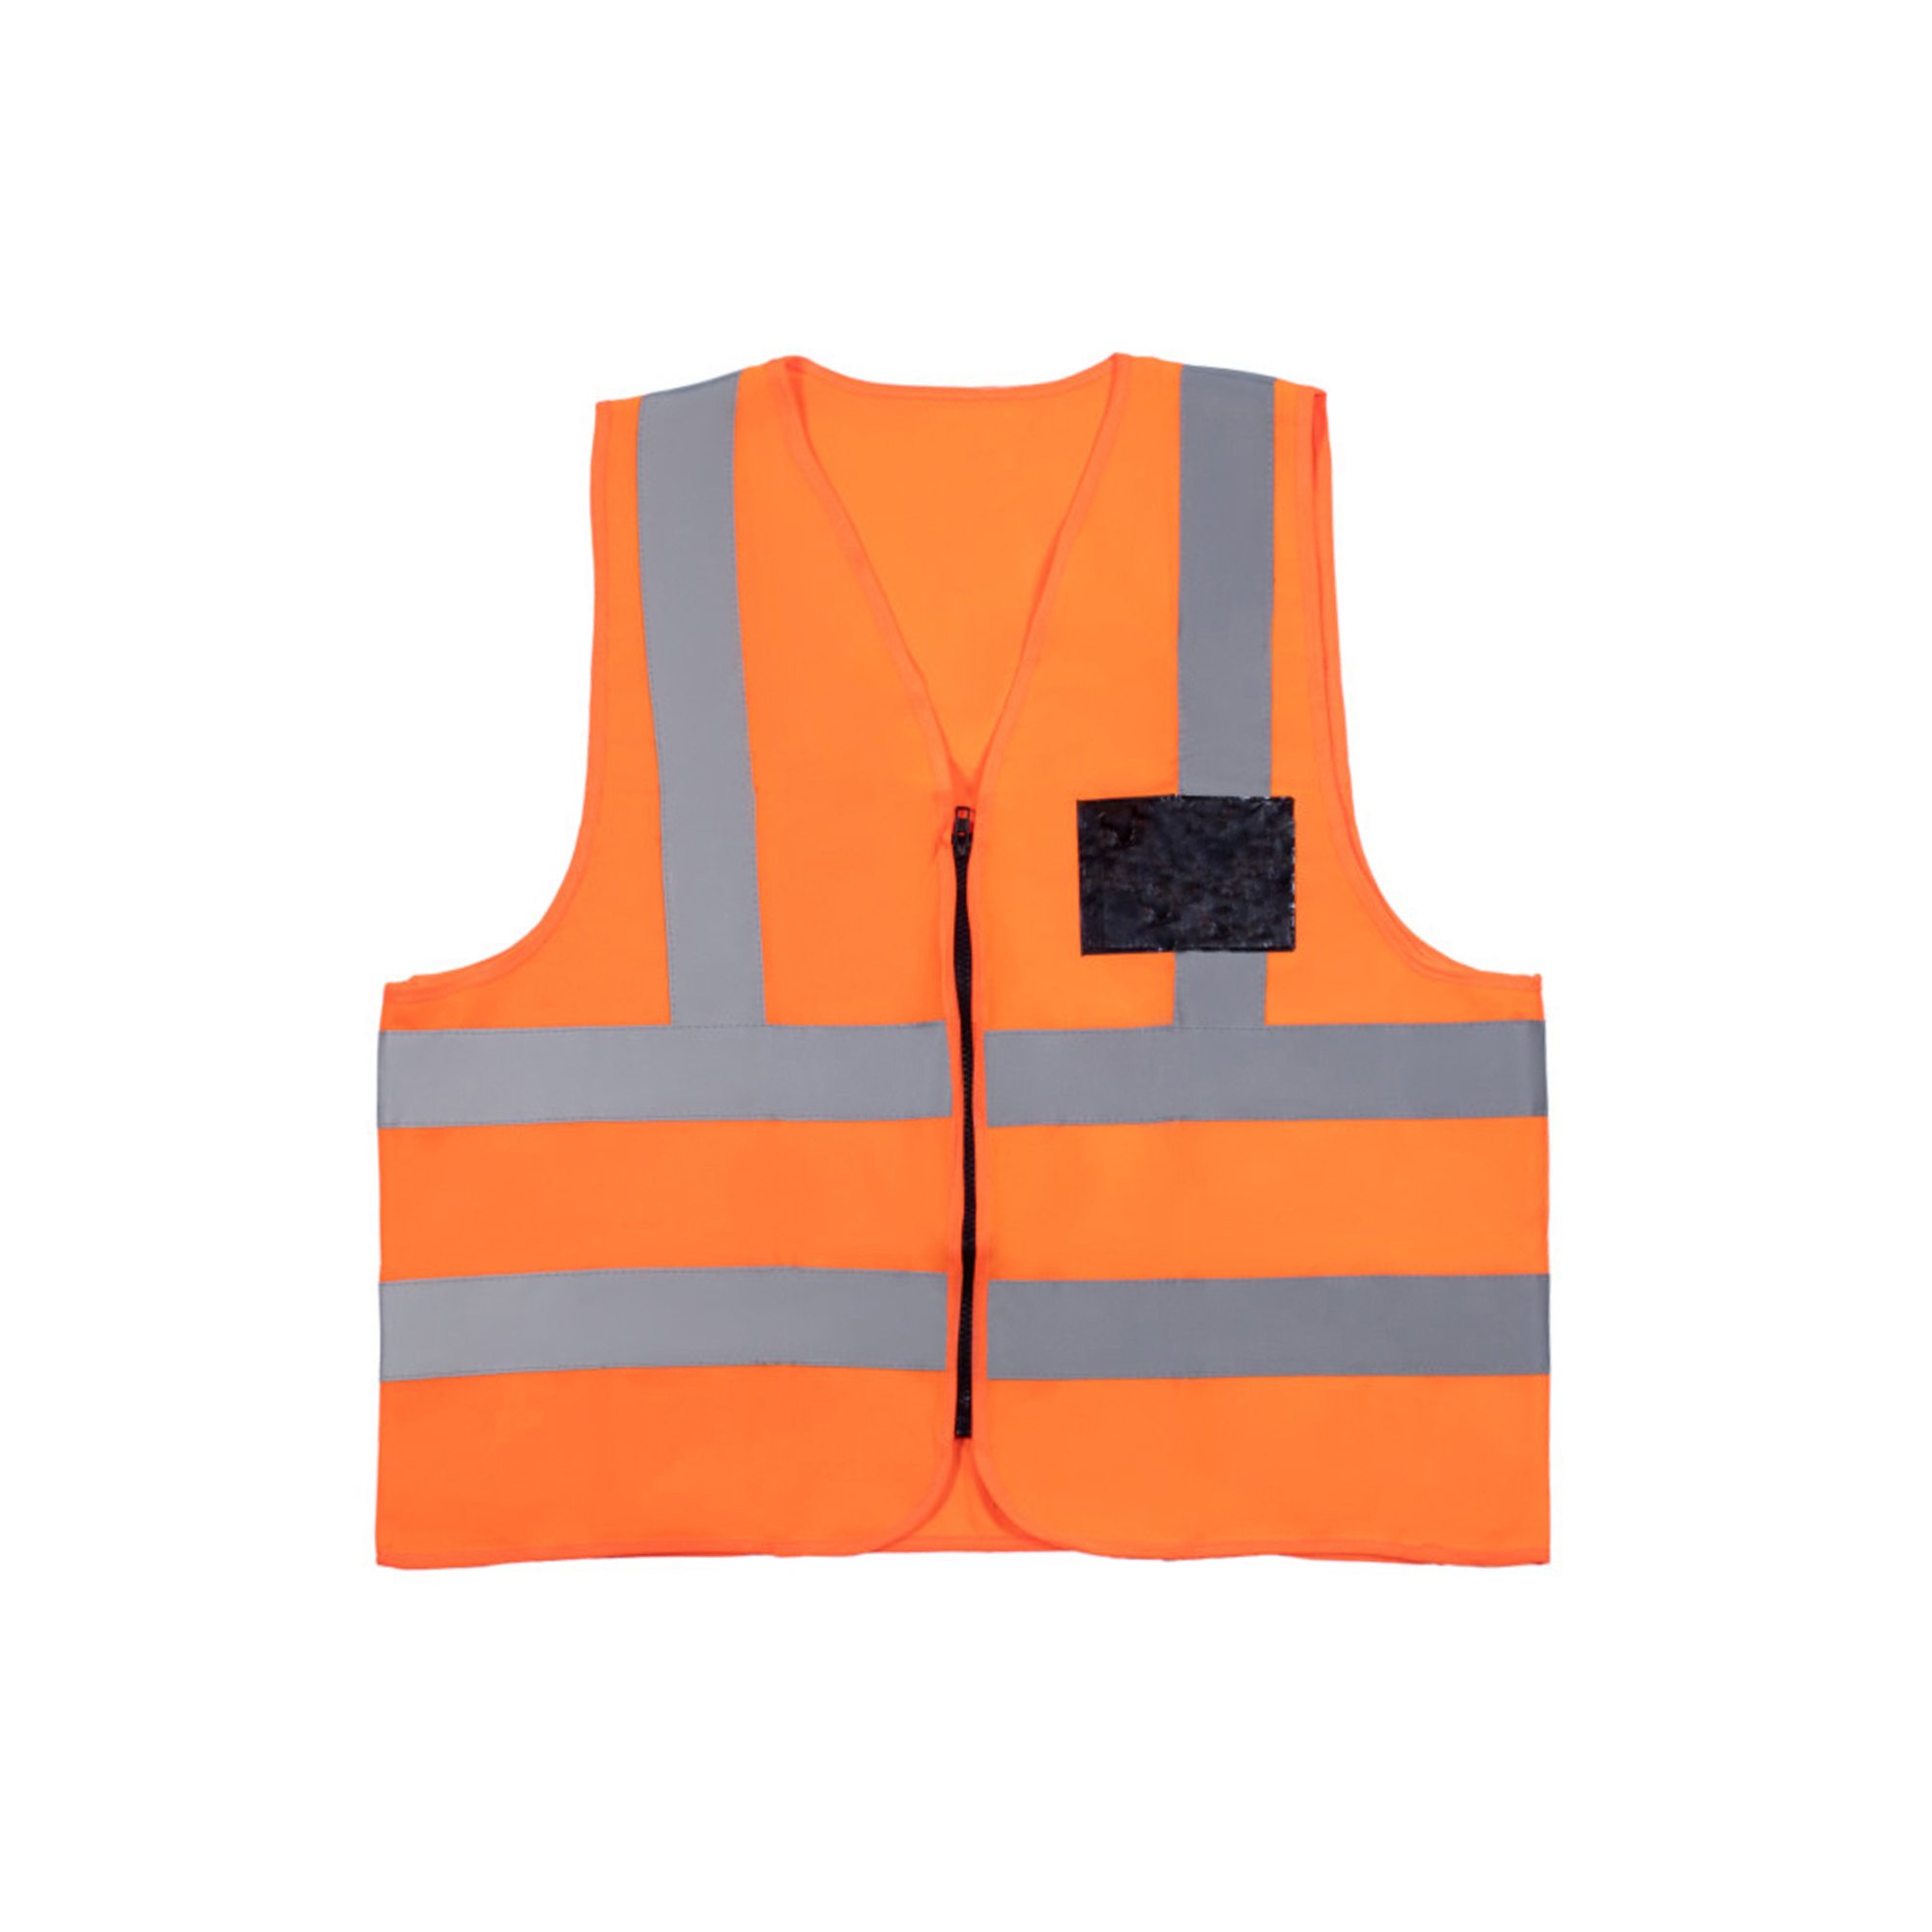 https://protekta.co.za/wp-content/uploads/2019/06/Orange-Reflective-Vest-with-Zip-ID-Pocket.jpg